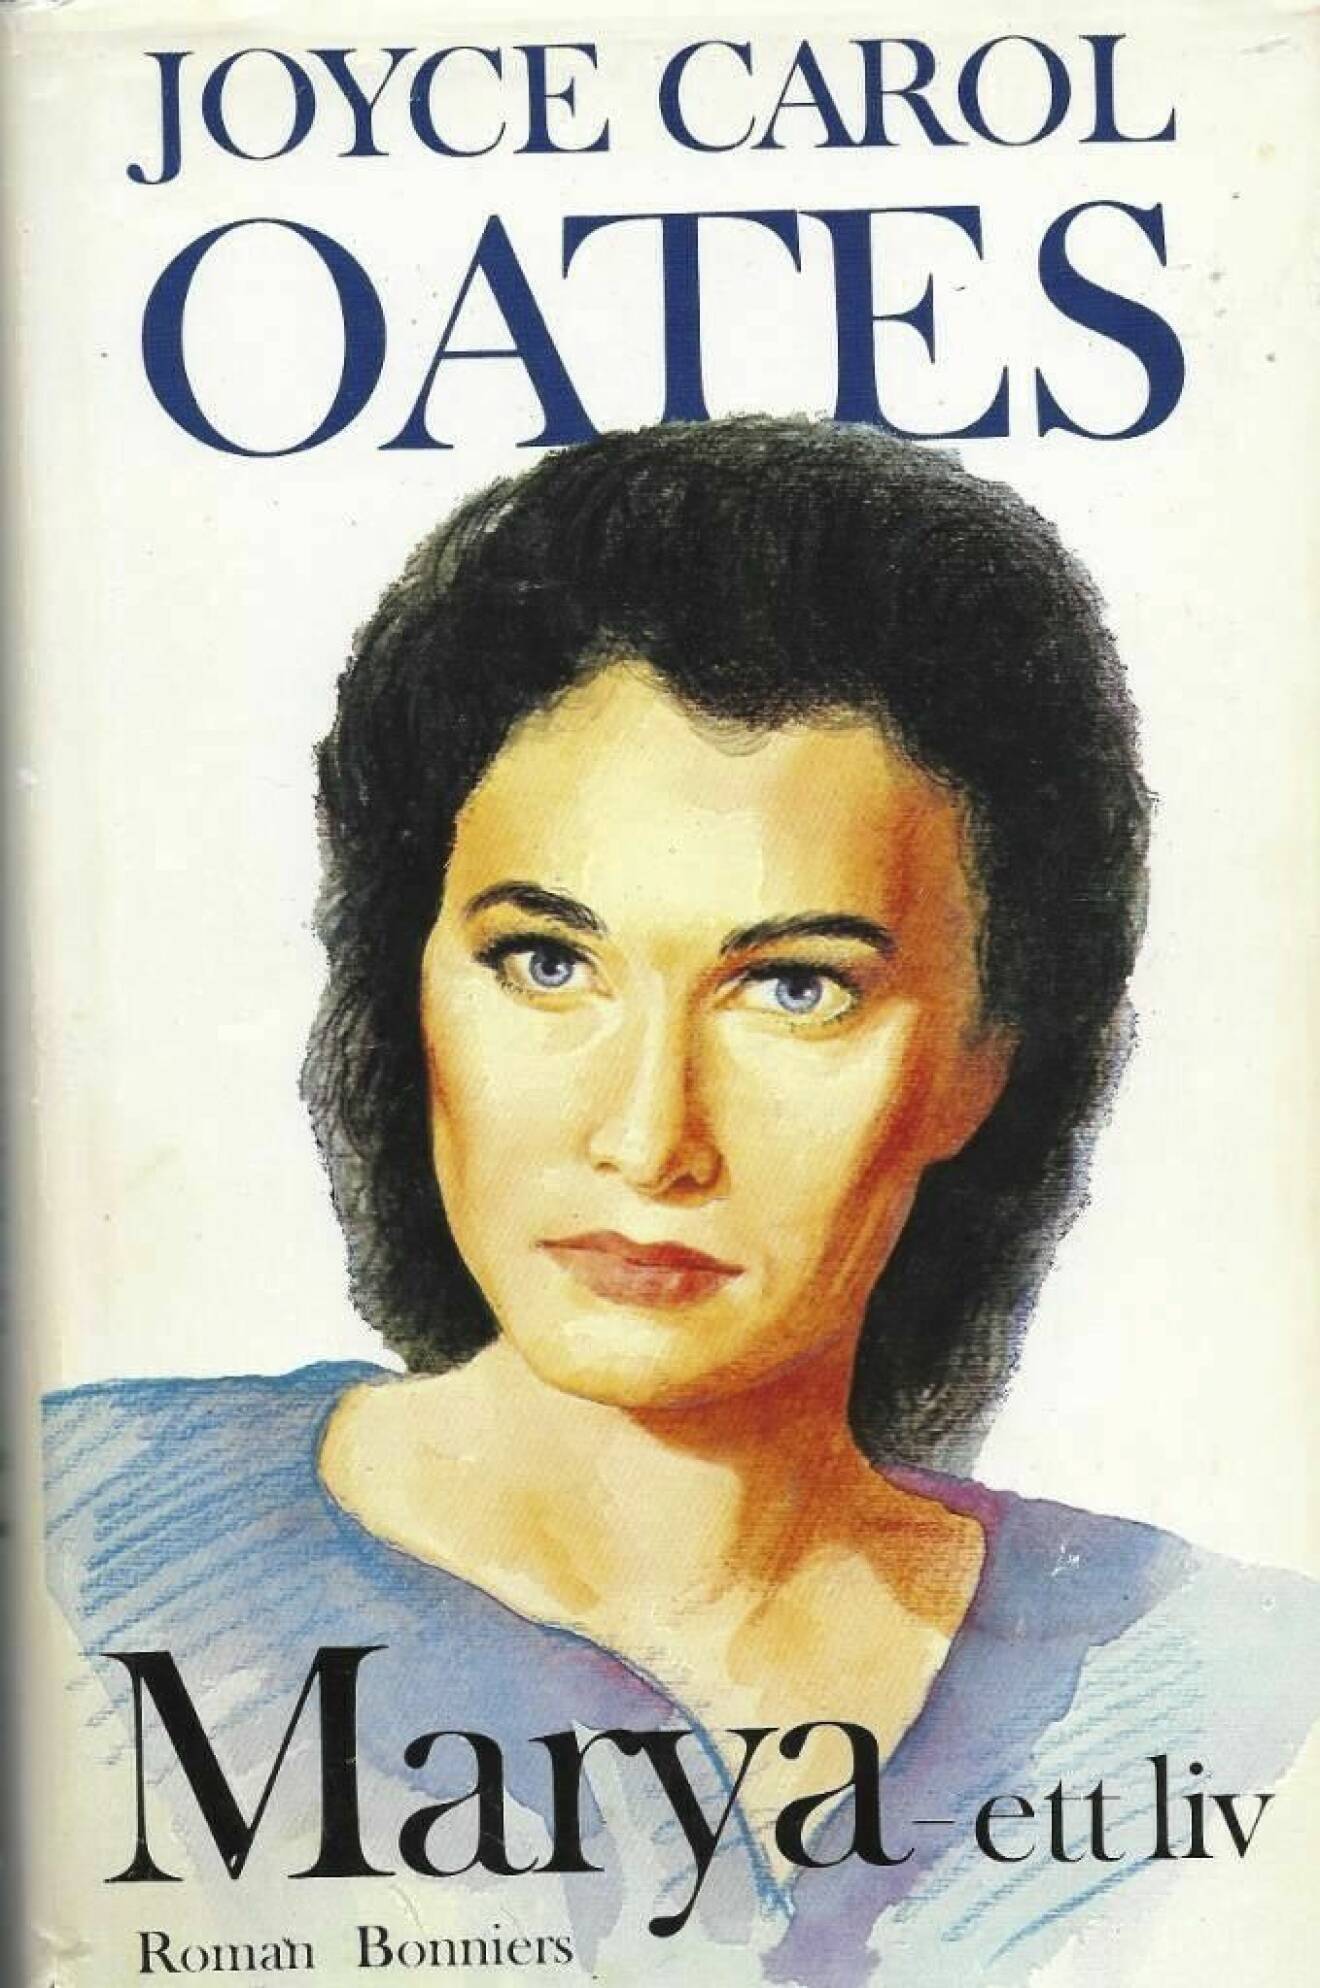 Marya, Joyce Carol Oates